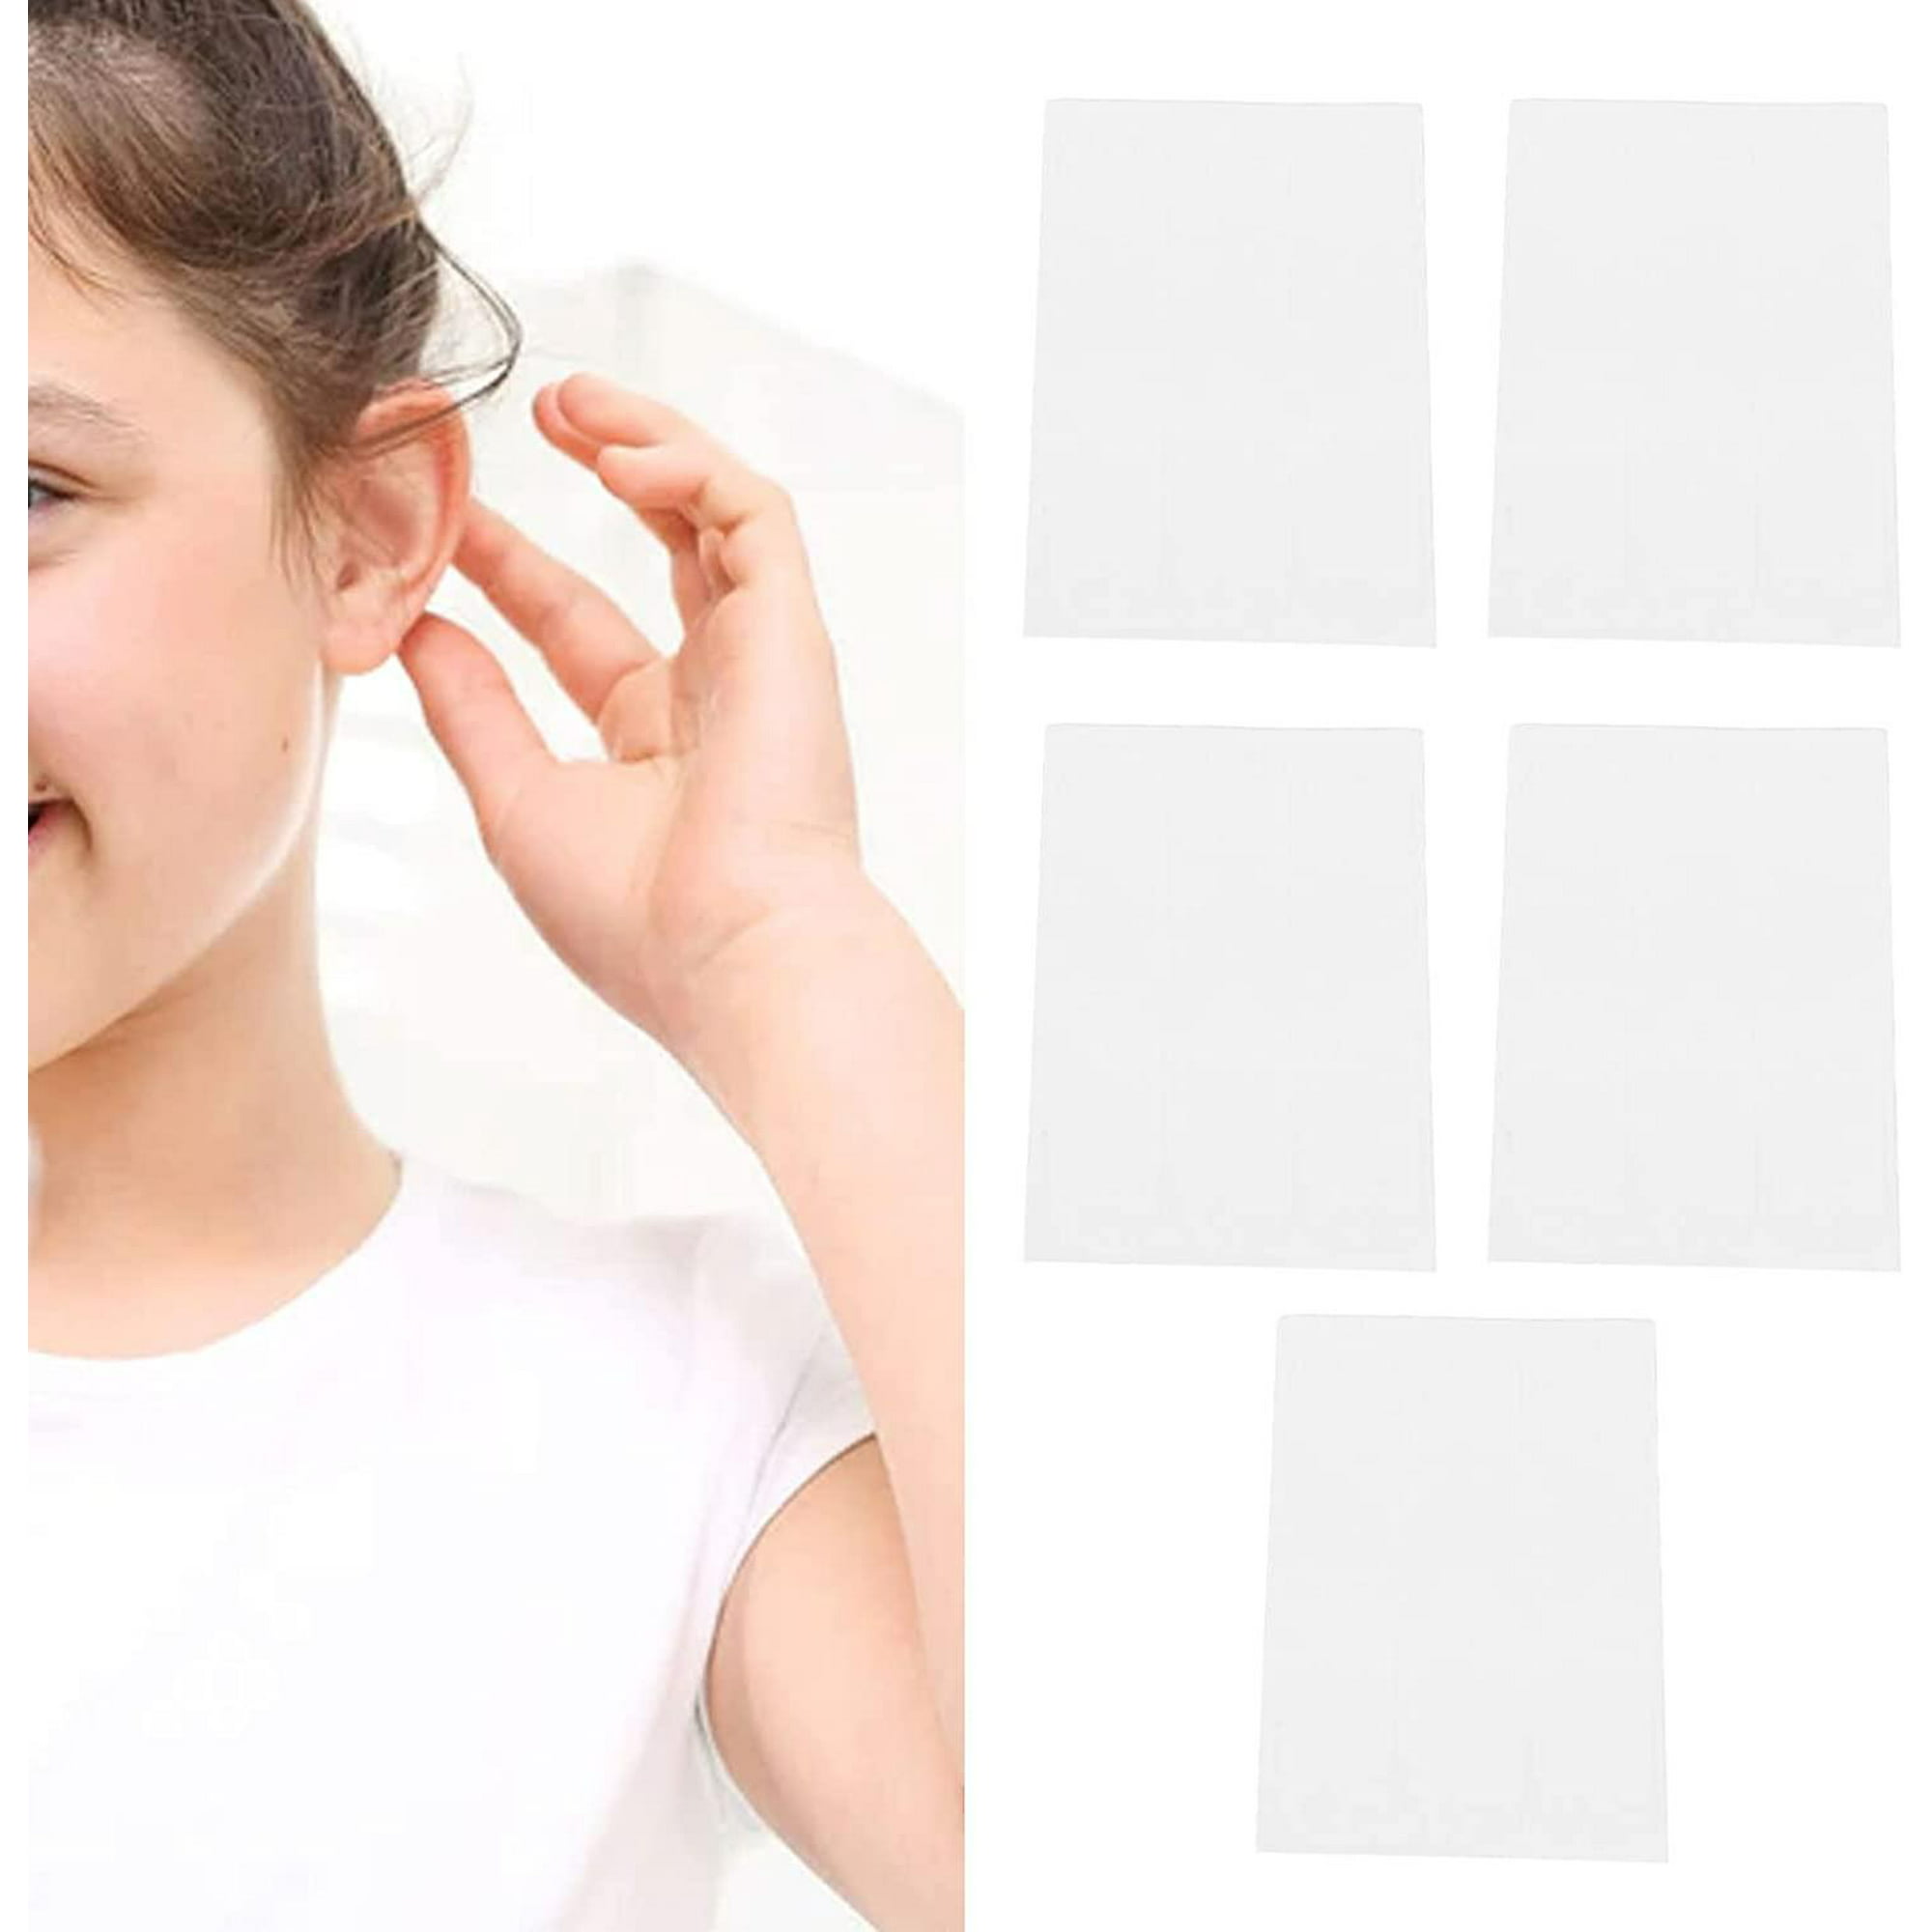 Corrector de orejas, Correctores de orejas sobresalientes transparentes,  Correctores estéticos de pegatinas de silicona para orejas Comtable,  Productos para el cuidado de correctores de orejas para a JAMW Sencillez